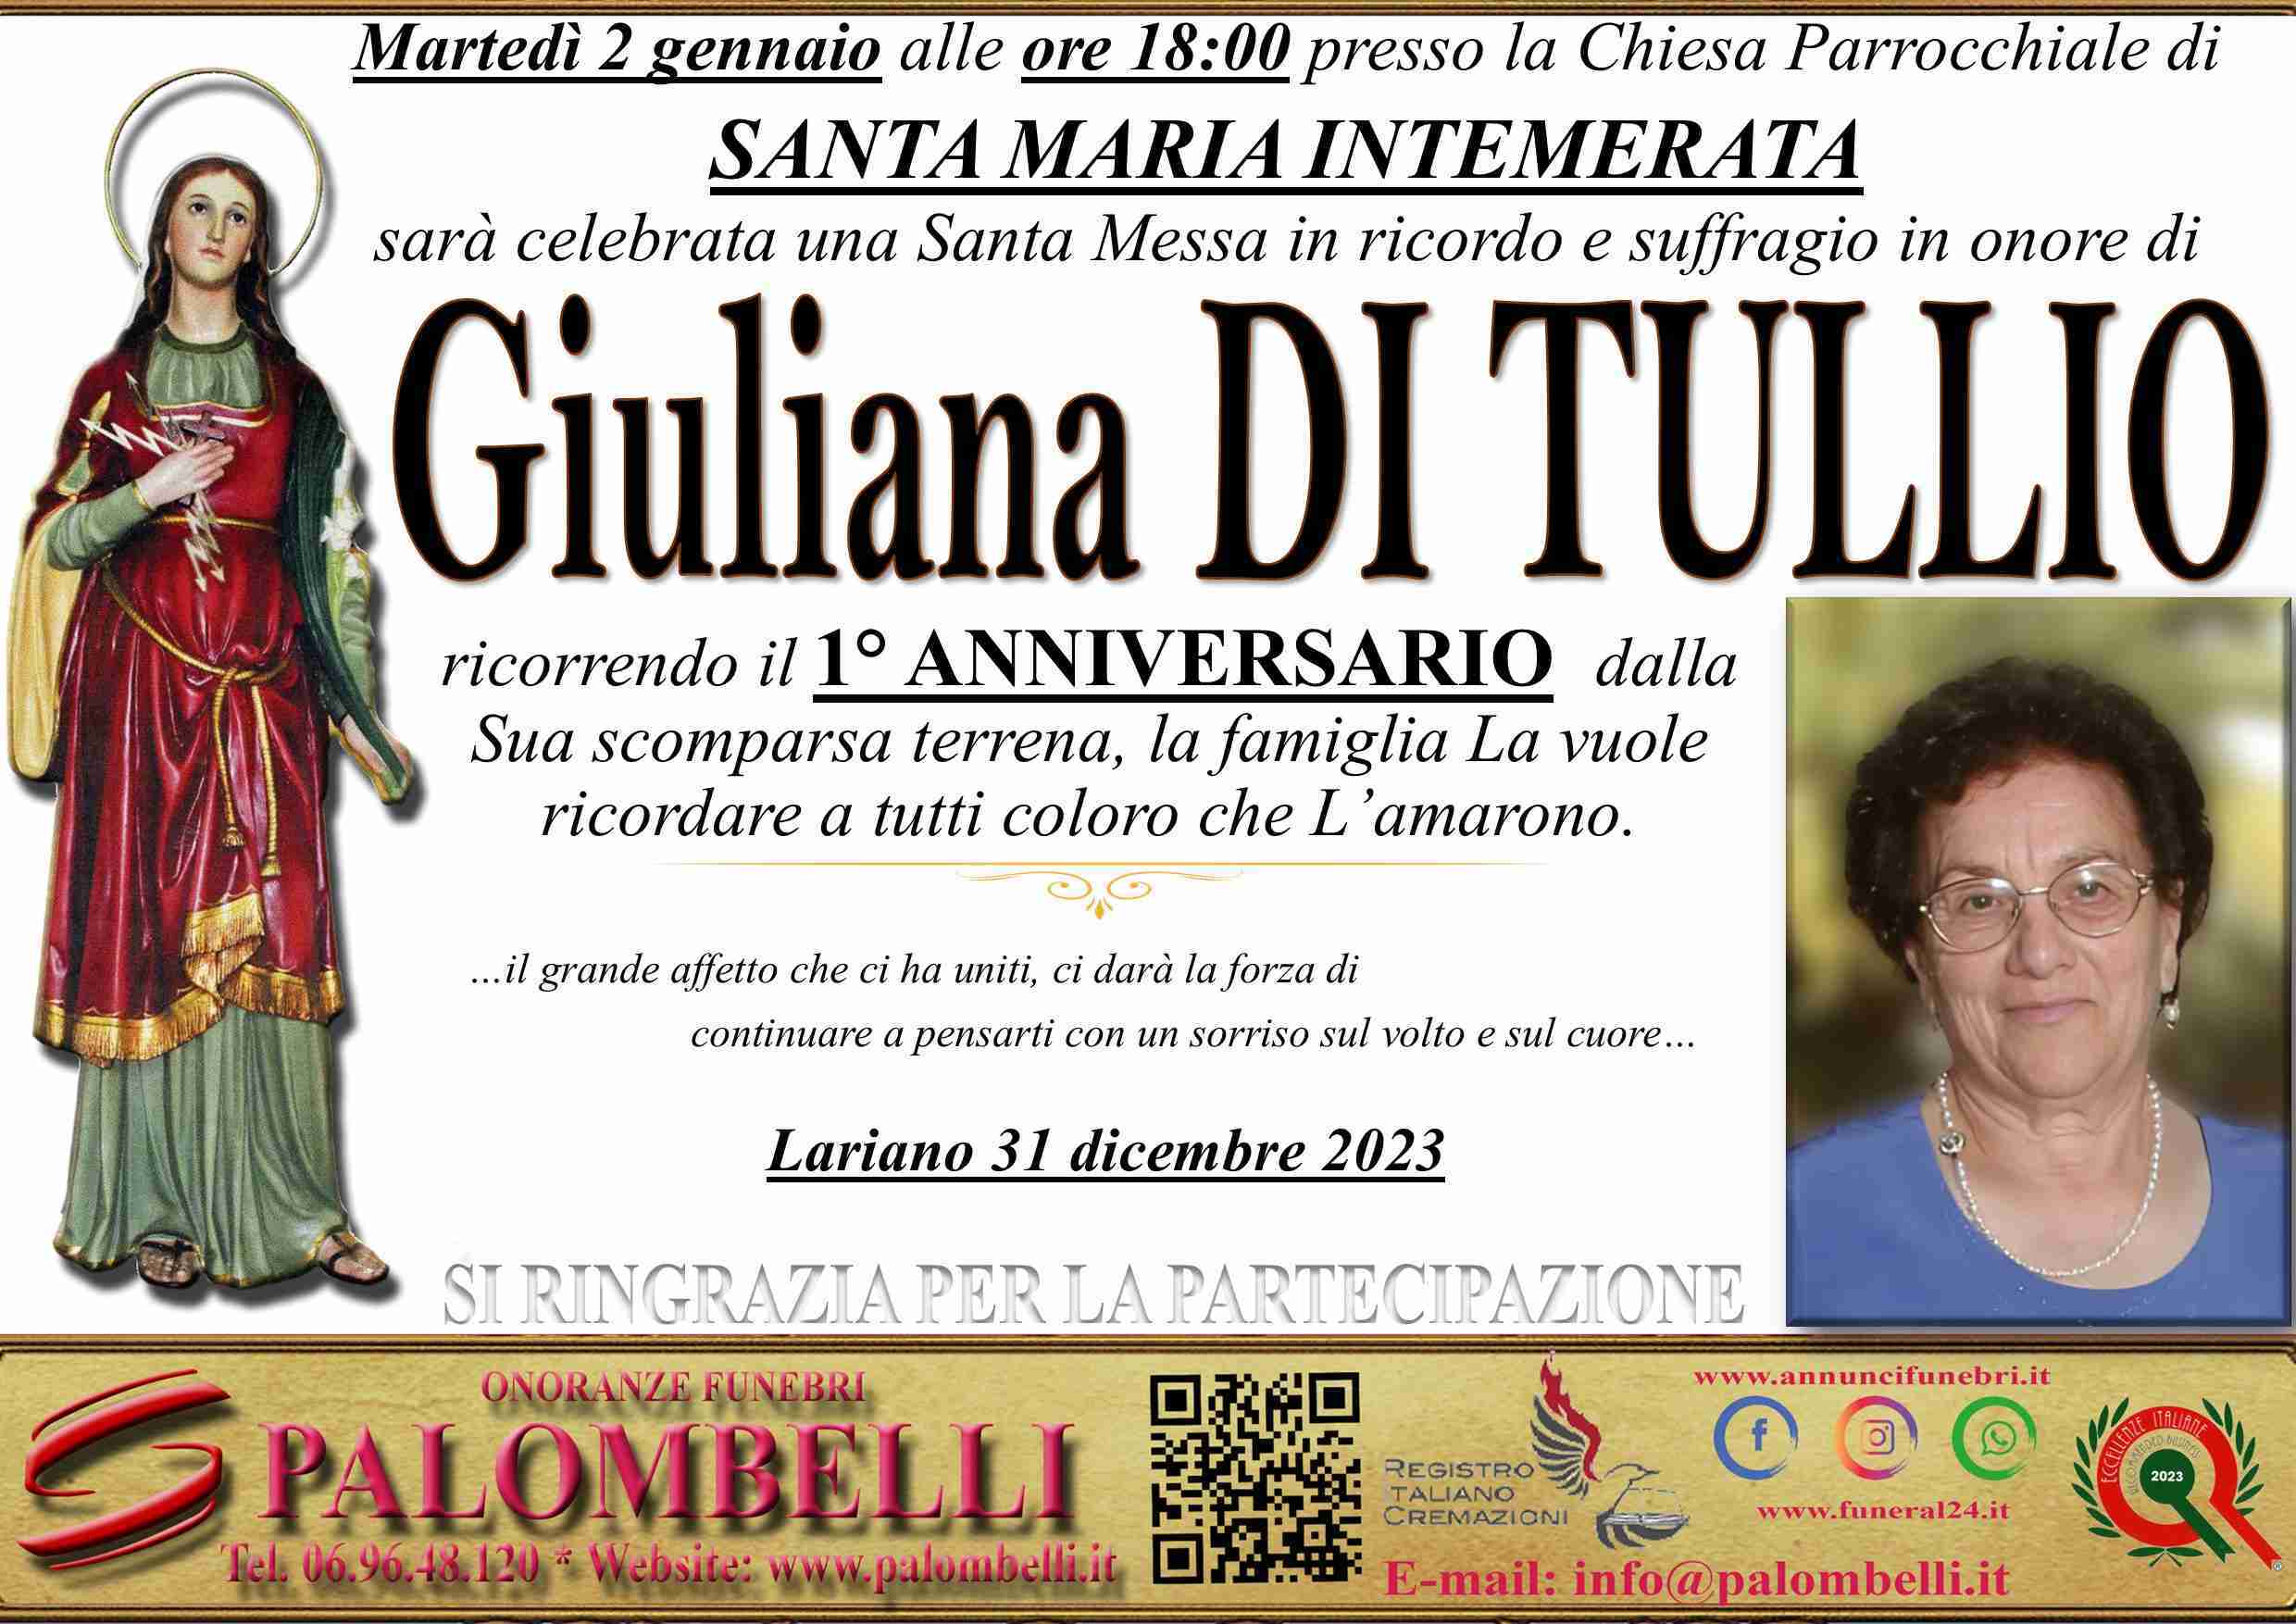 Giuliana Di Tullio